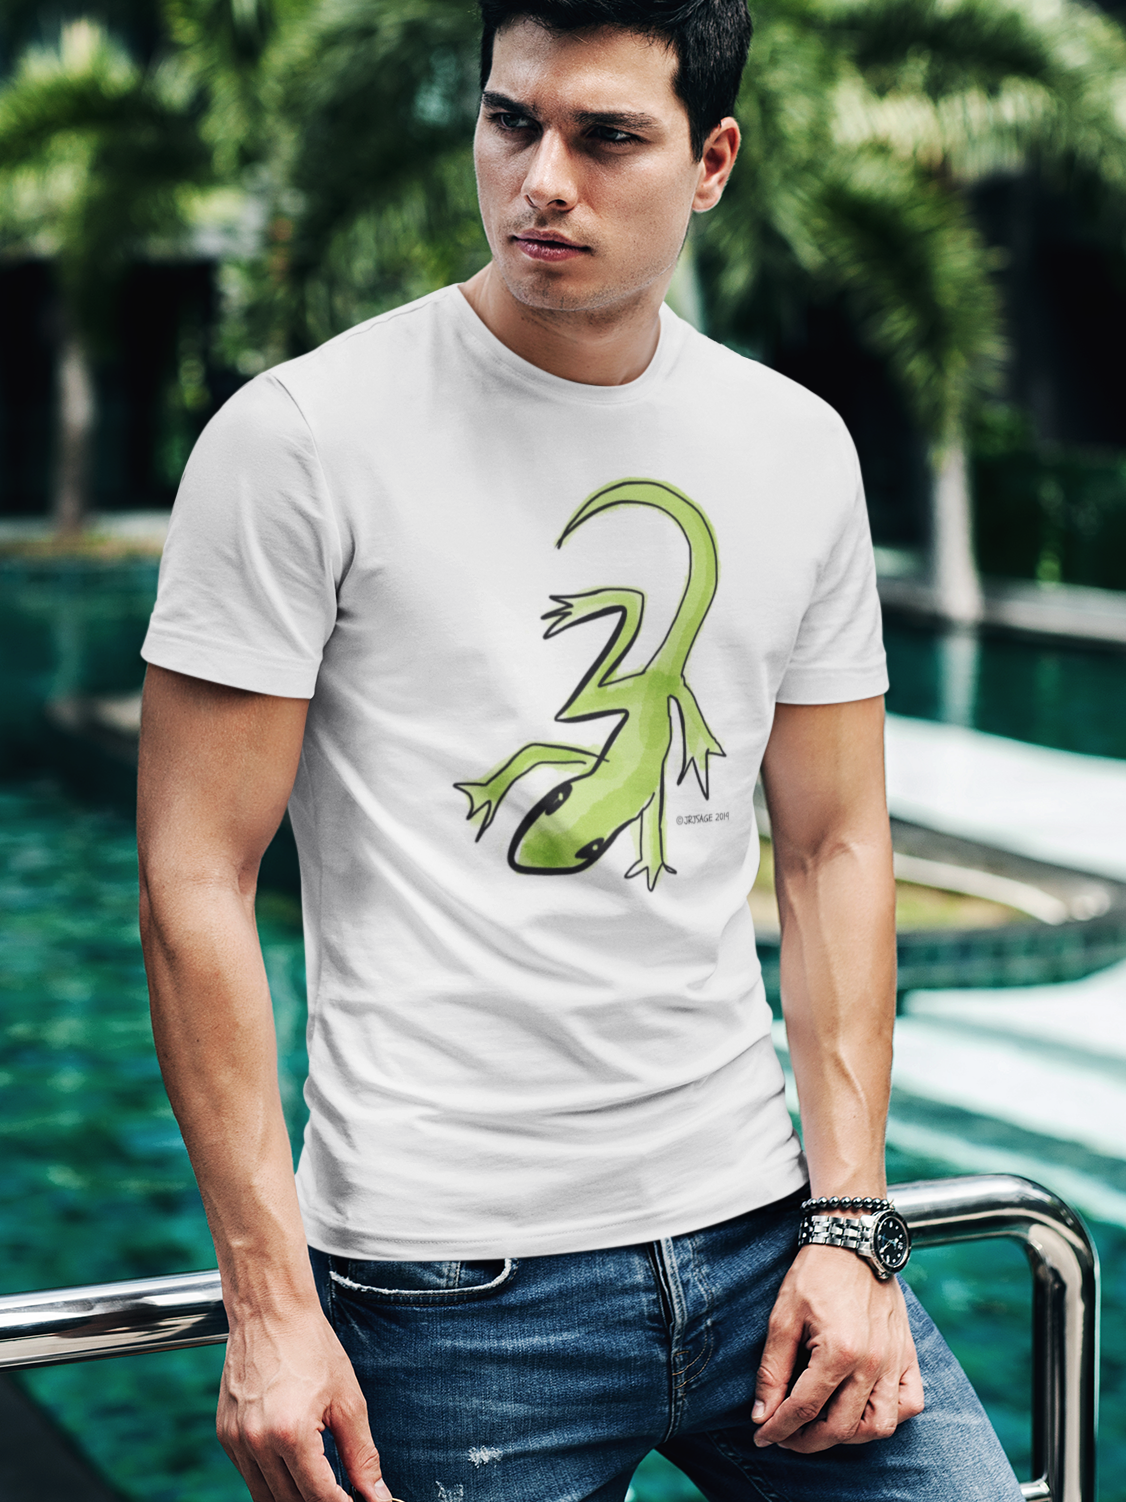 Lounge Lizard T-shirt - young man wears a white colour vegan cotton gecko t-shirt by Hector and Bone